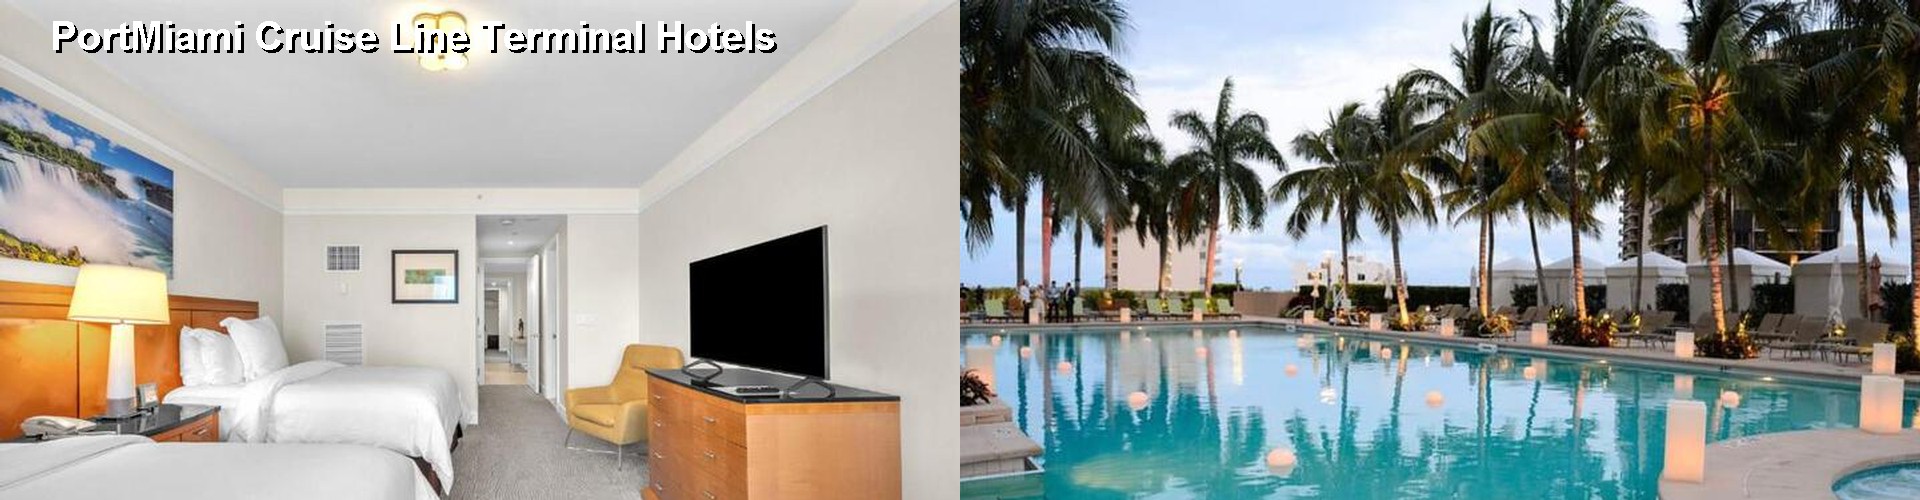 5 Best Hotels near PortMiami Cruise Line Terminal